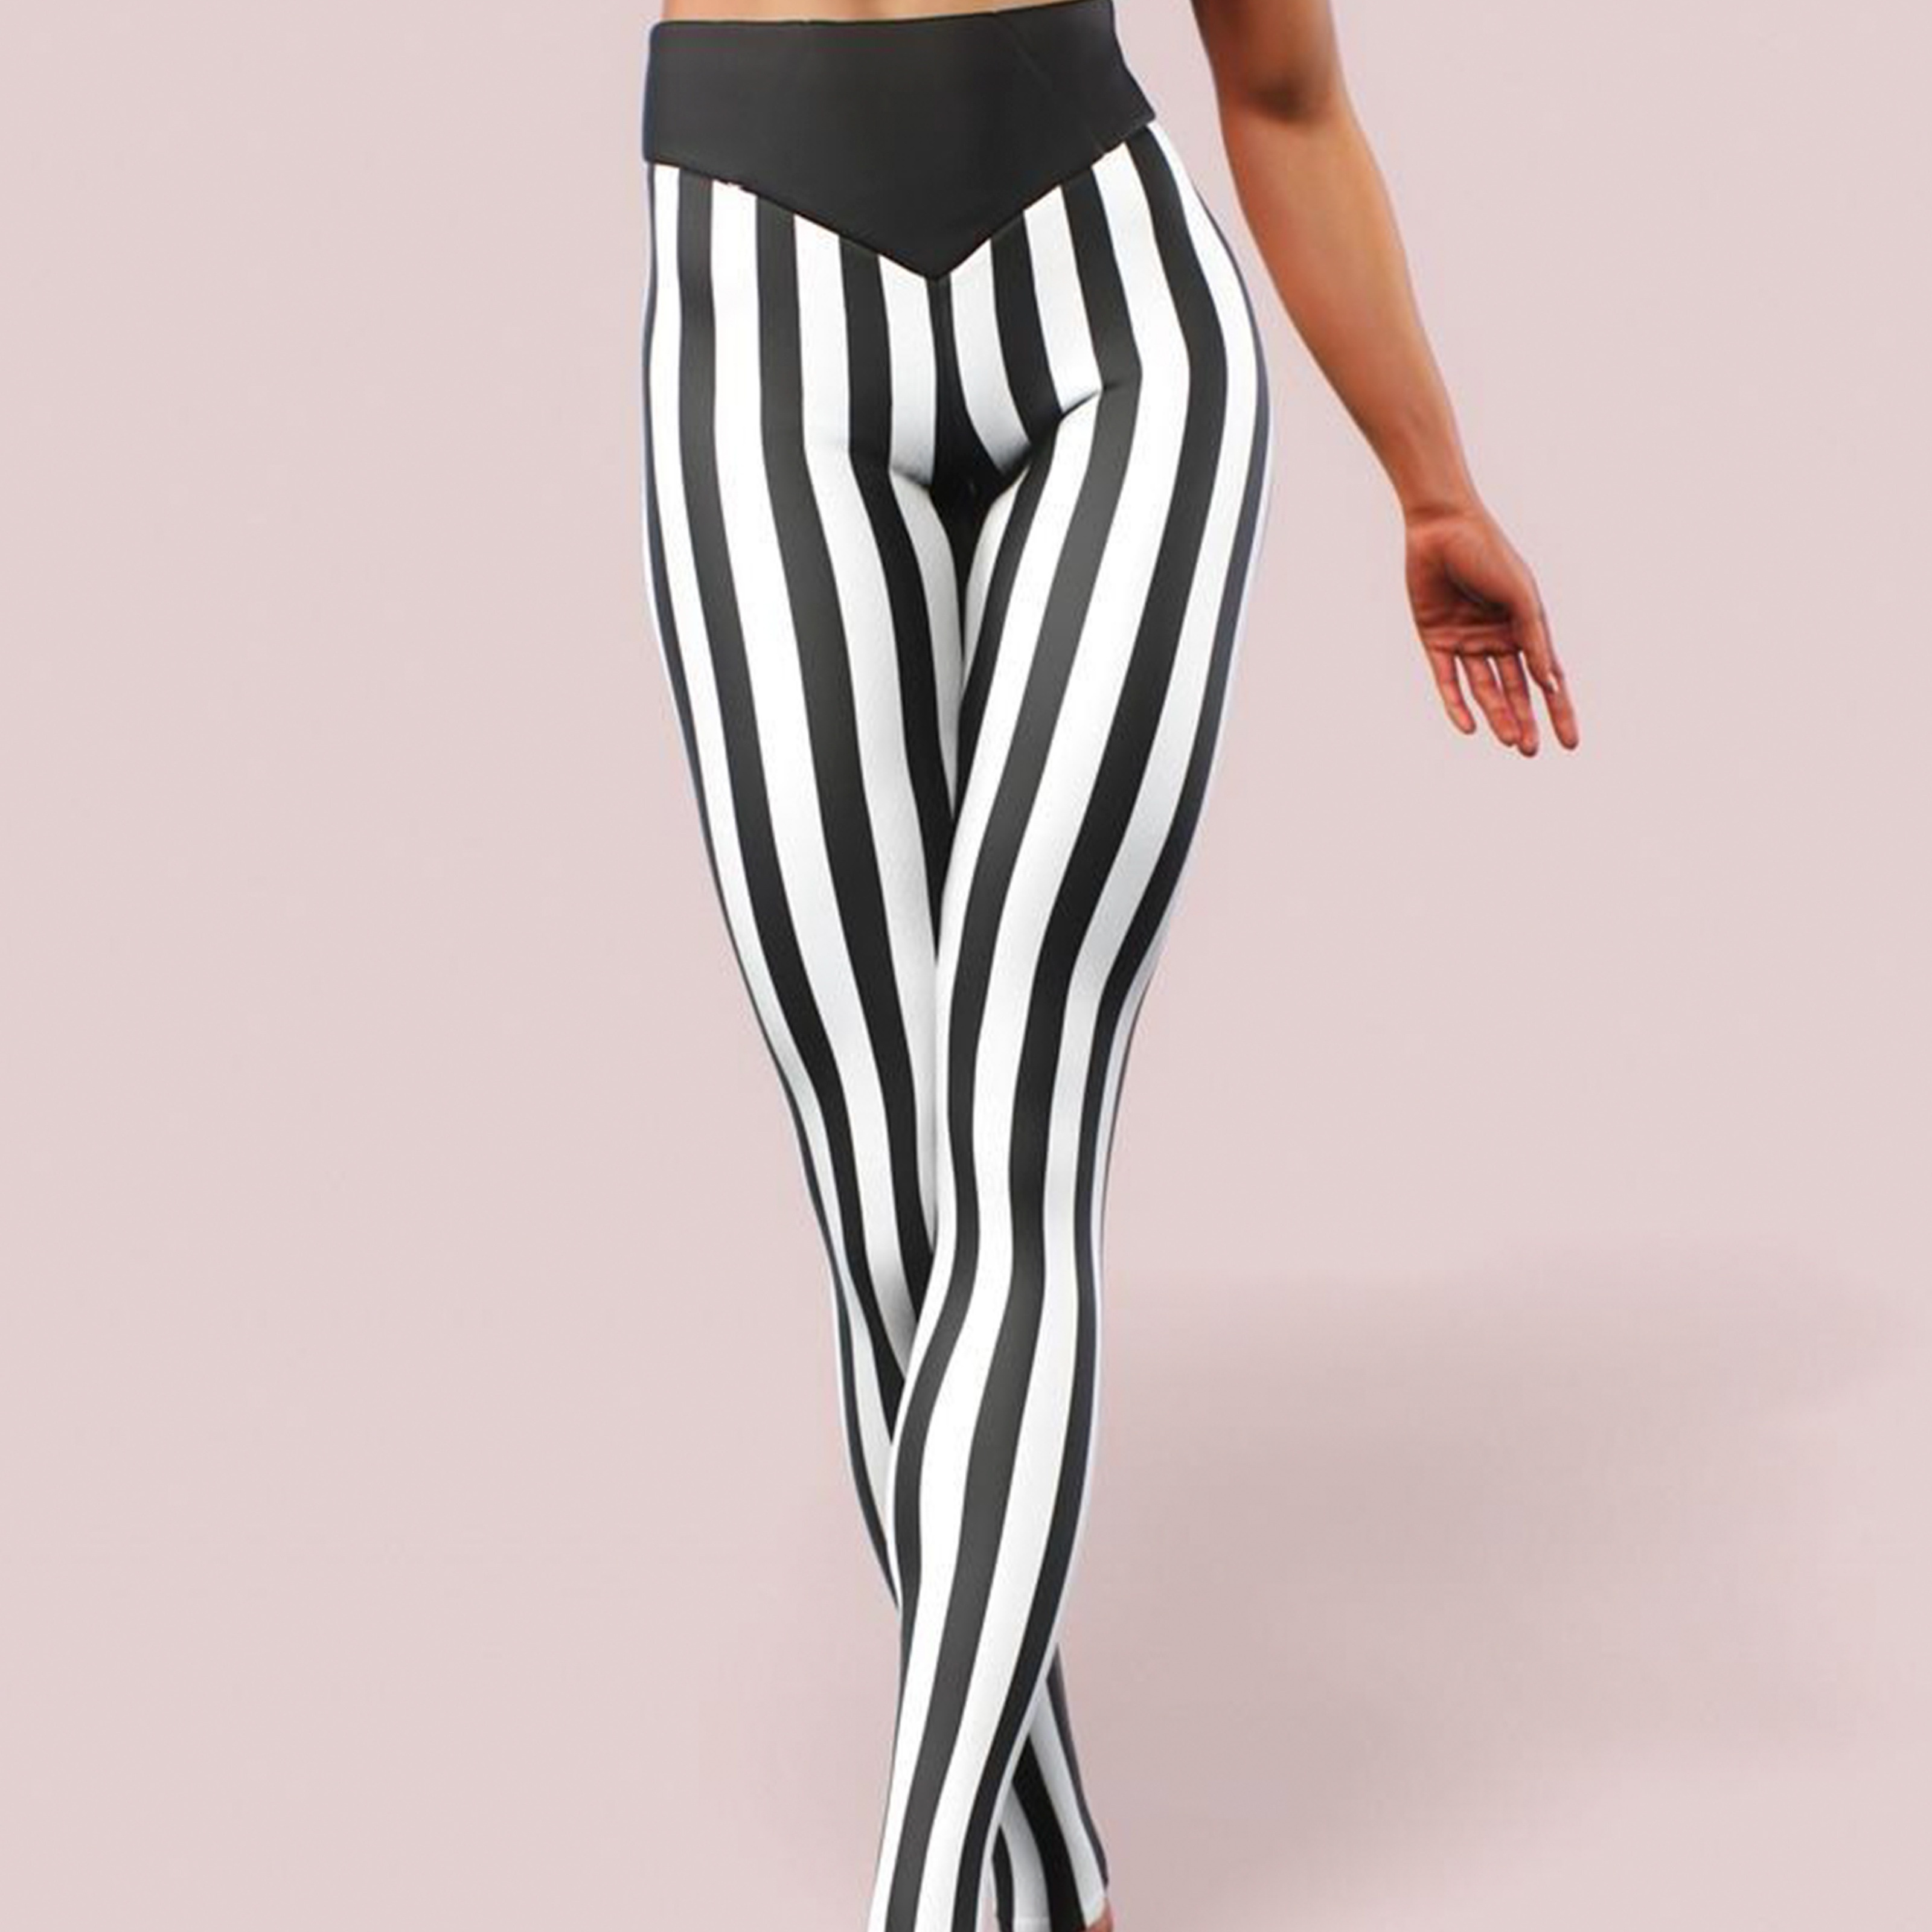 

Front And Back V-waist Striped Leggings, Elastic Sports Vertical Print Yoga Pants, Sports Women's Pants, Black And White Vertical Stripes